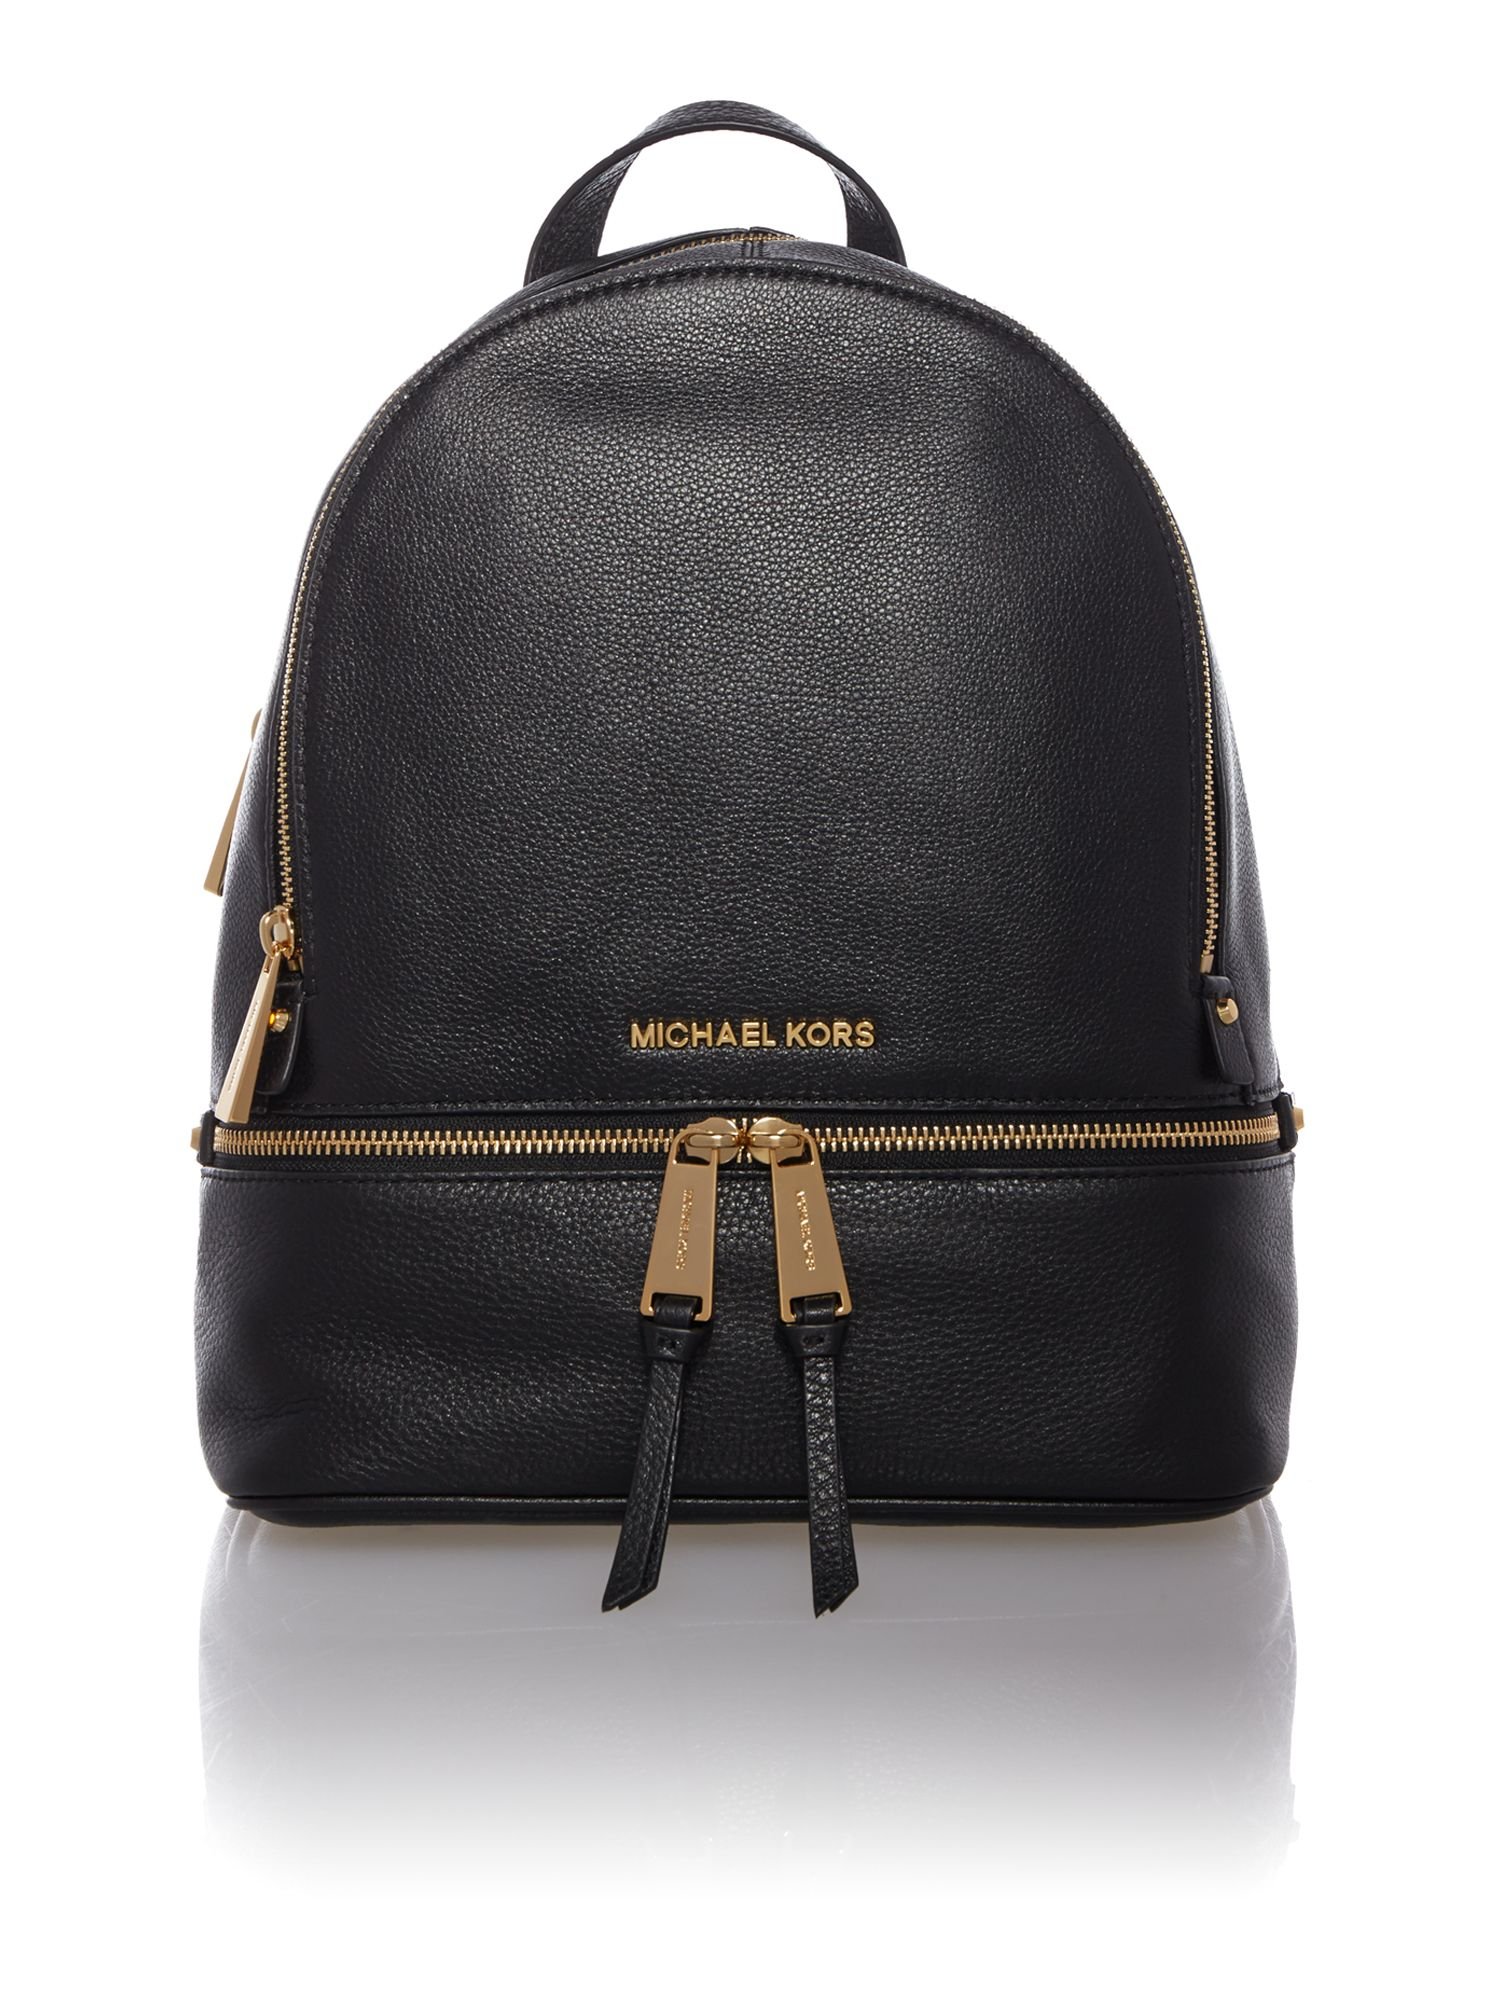 Michael kors Rhea Zip Black Small Backpack in Black | Lyst